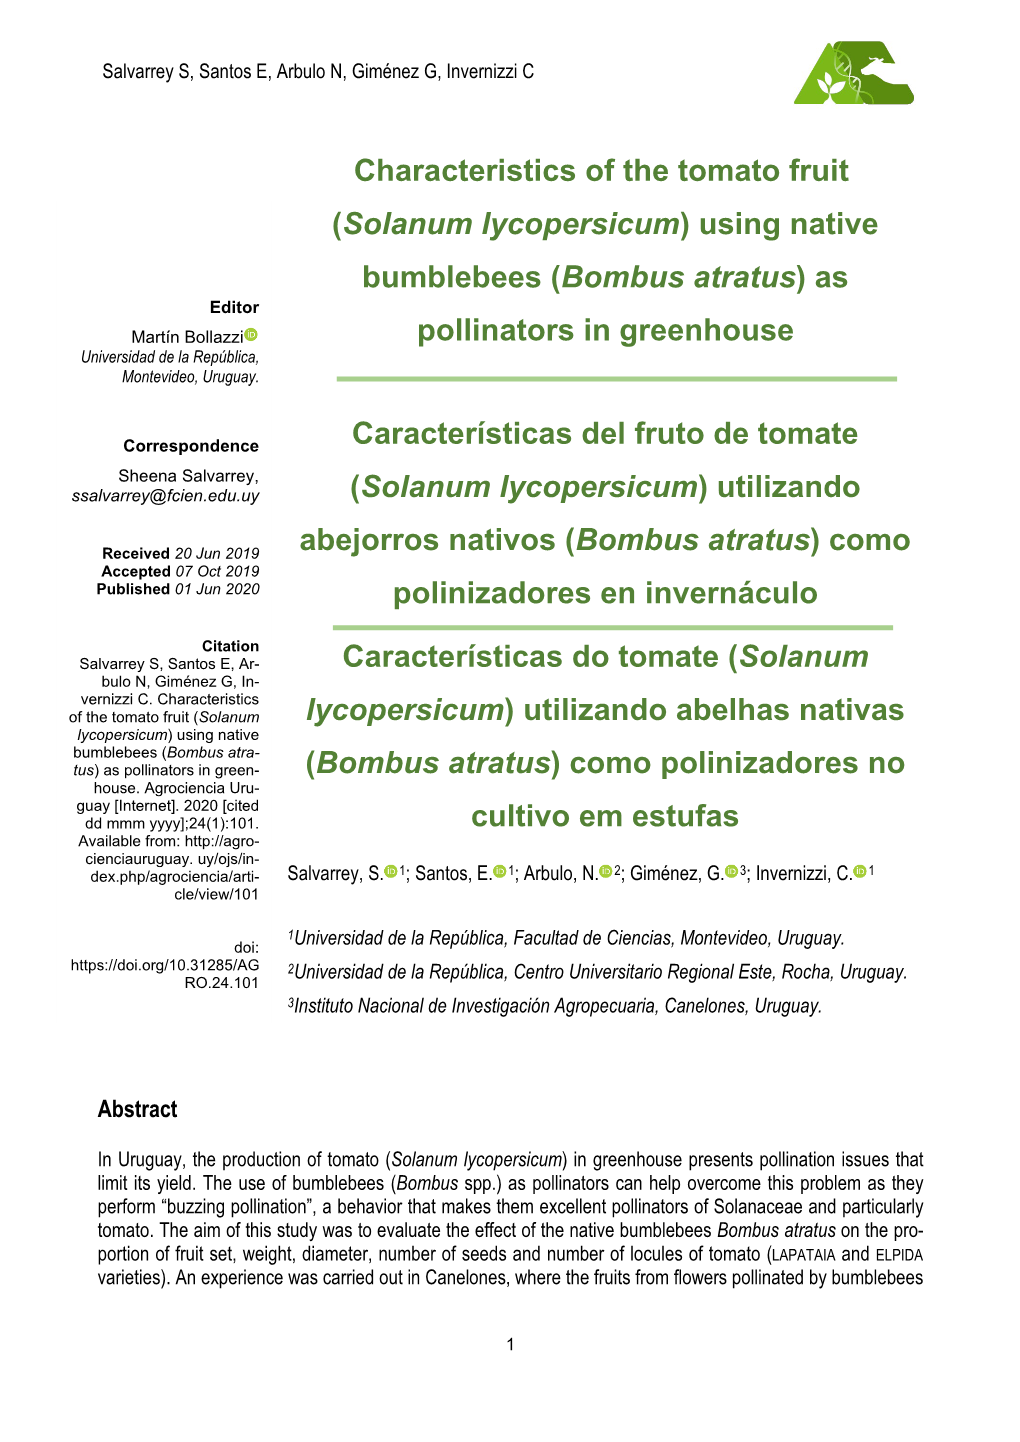 Characteristics of the Tomato Fruit (Solanum Lycopersicum) Using Native